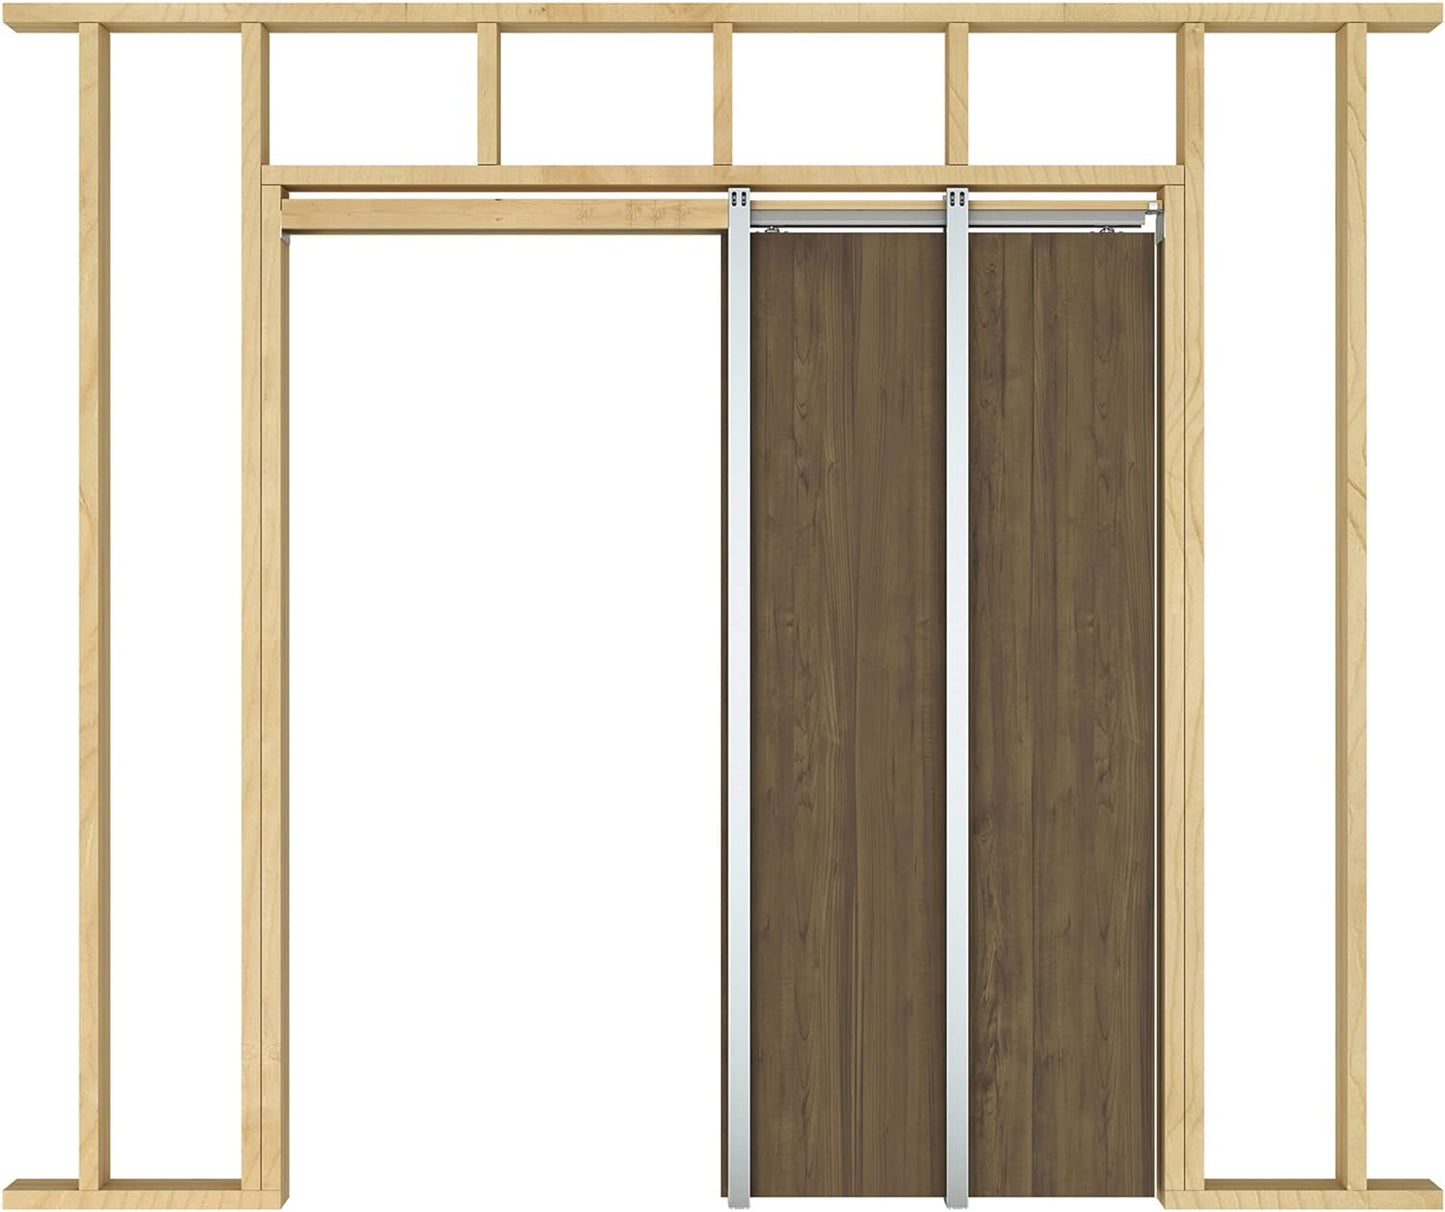 JUBEST Pocket Door Frame Kits with Galvanized Steel Studs, for 24 in. to 36 in. x 80in. Door (for 2x4 Stud Wall)